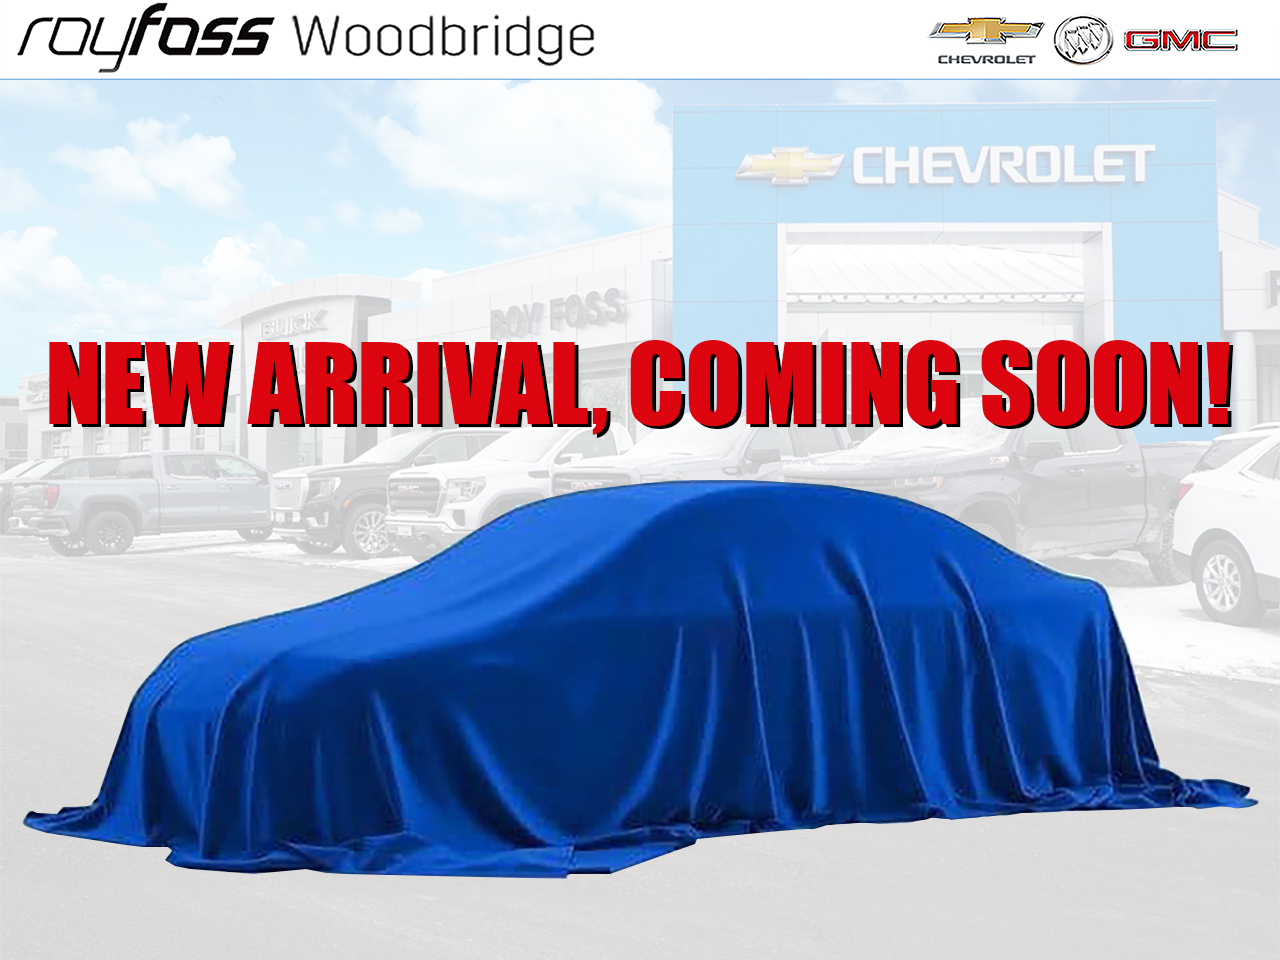 2020 Chevrolet Tahoe 4X4, New Arrival!